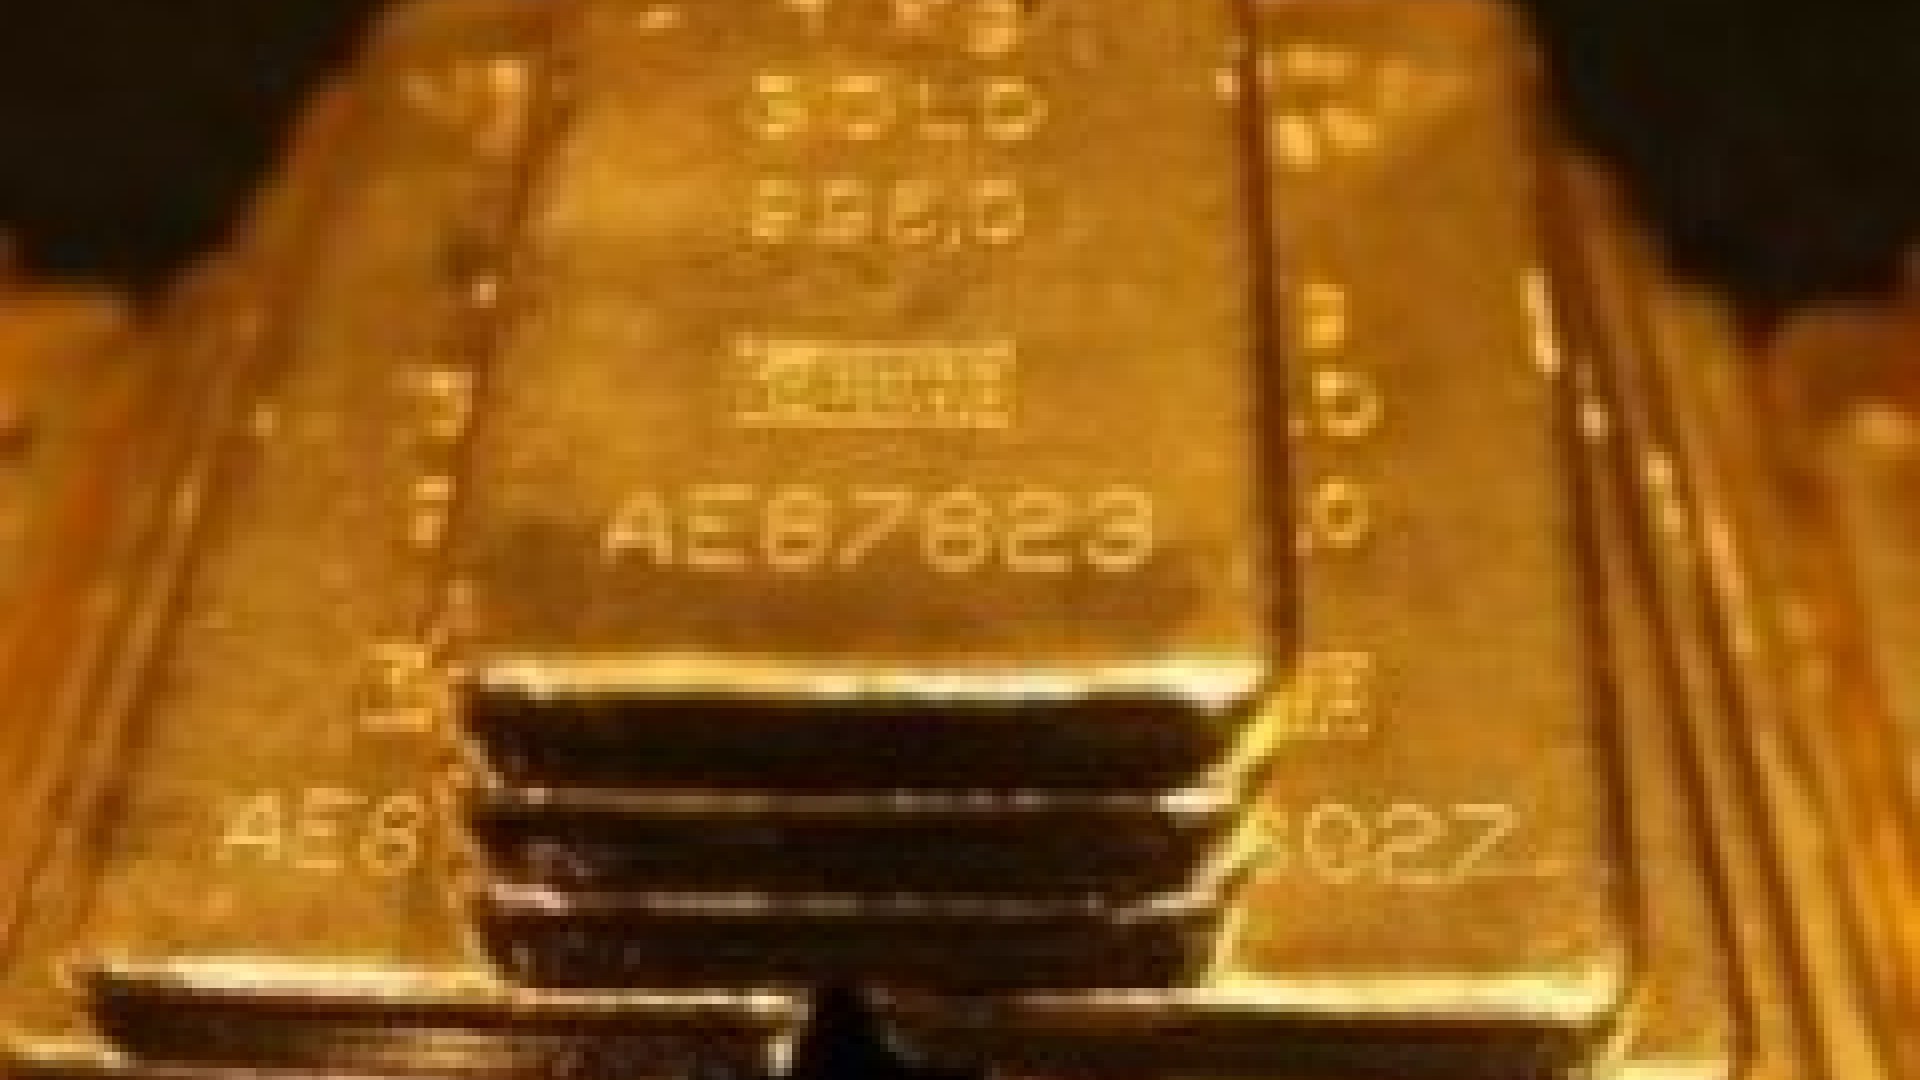 Investitorii cumpara aur pentru a se proteja impotriva crizei economice